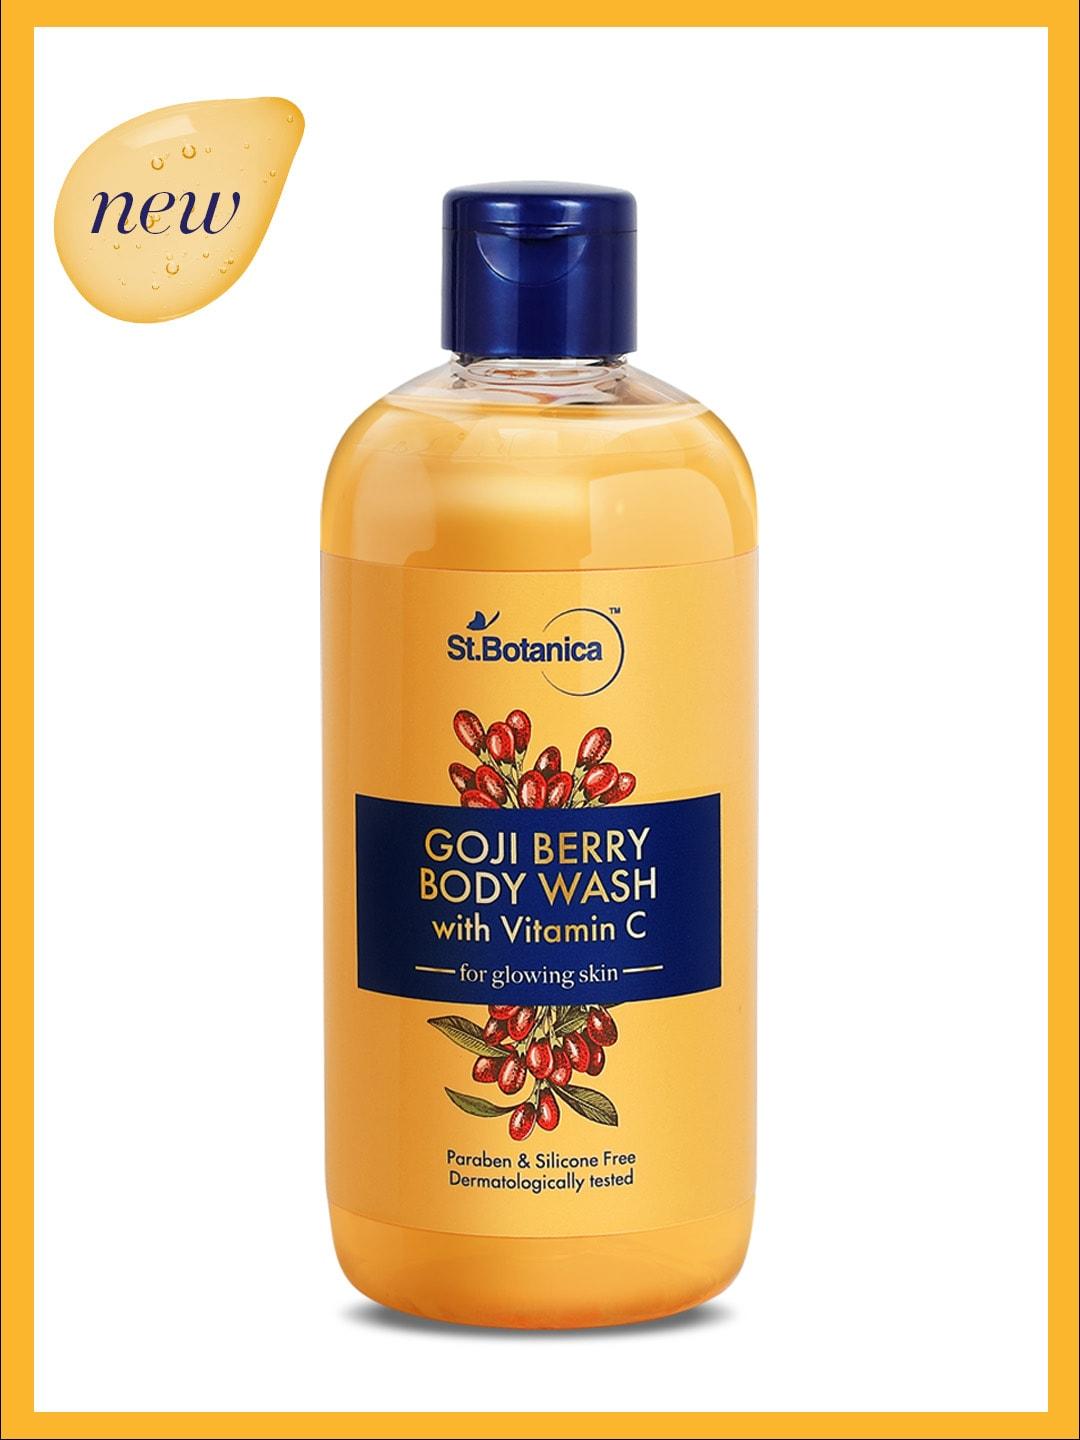 St.Botanica Goji Berry & Vitamin C Body Wash for Fresh & Glowing Skin - 300ml